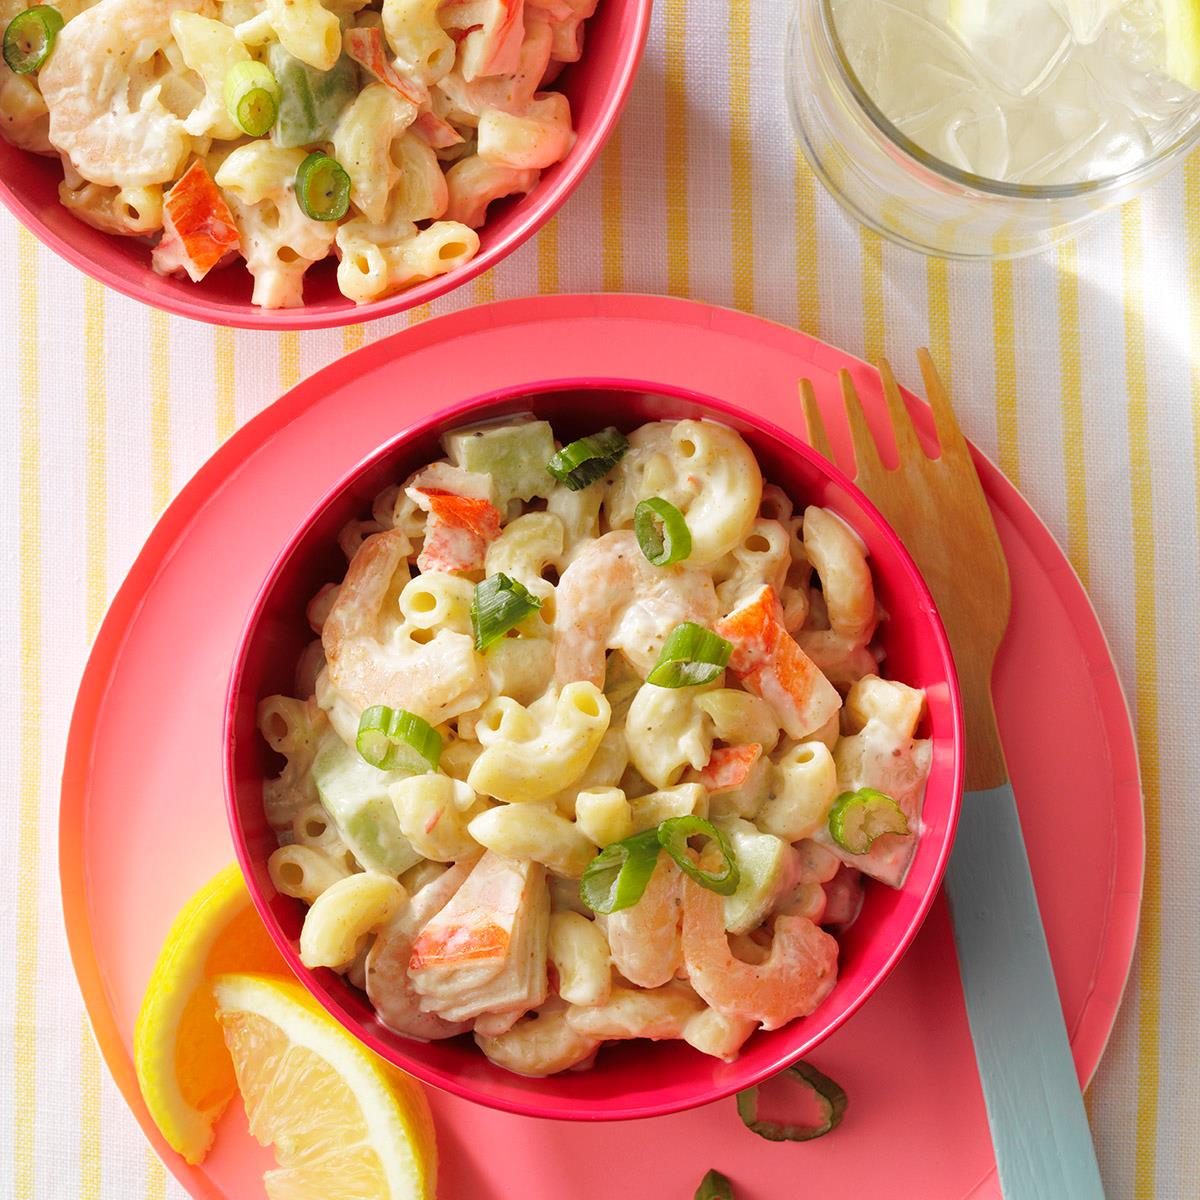 https://www.tasteofhome.com/wp-content/uploads/2021/02/Shrimp-and-Crab-Macaroni-Salad_EXPS_TOHJJ21_258990_E02_03_8b.jpg?fit=700%2C1024